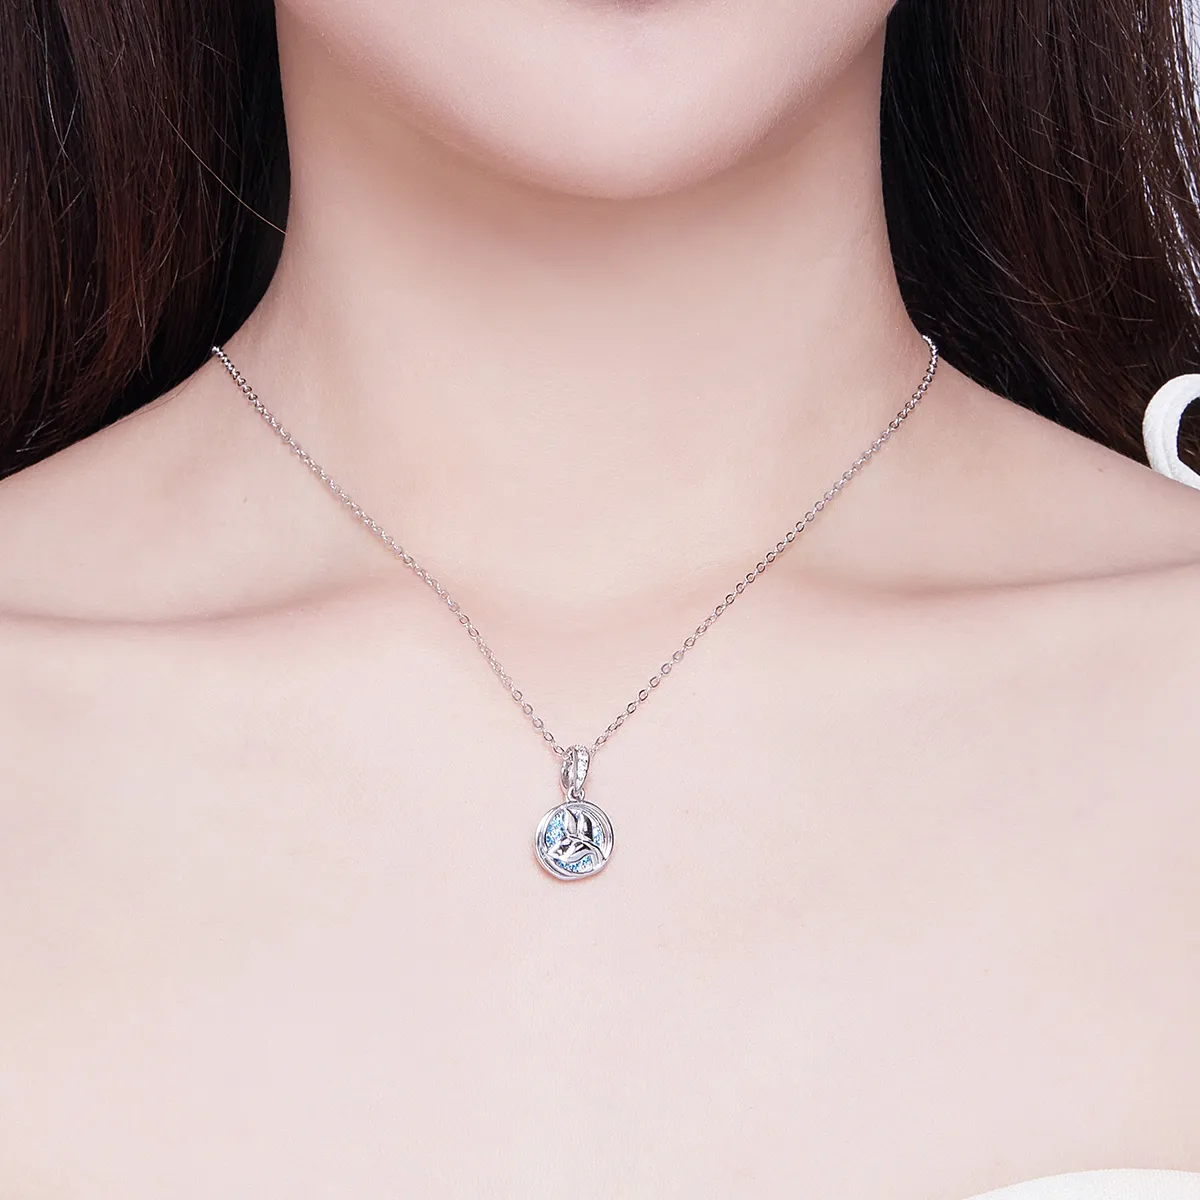 Pandora Style Silver Mermaid Fishtail Necklace - SCN343